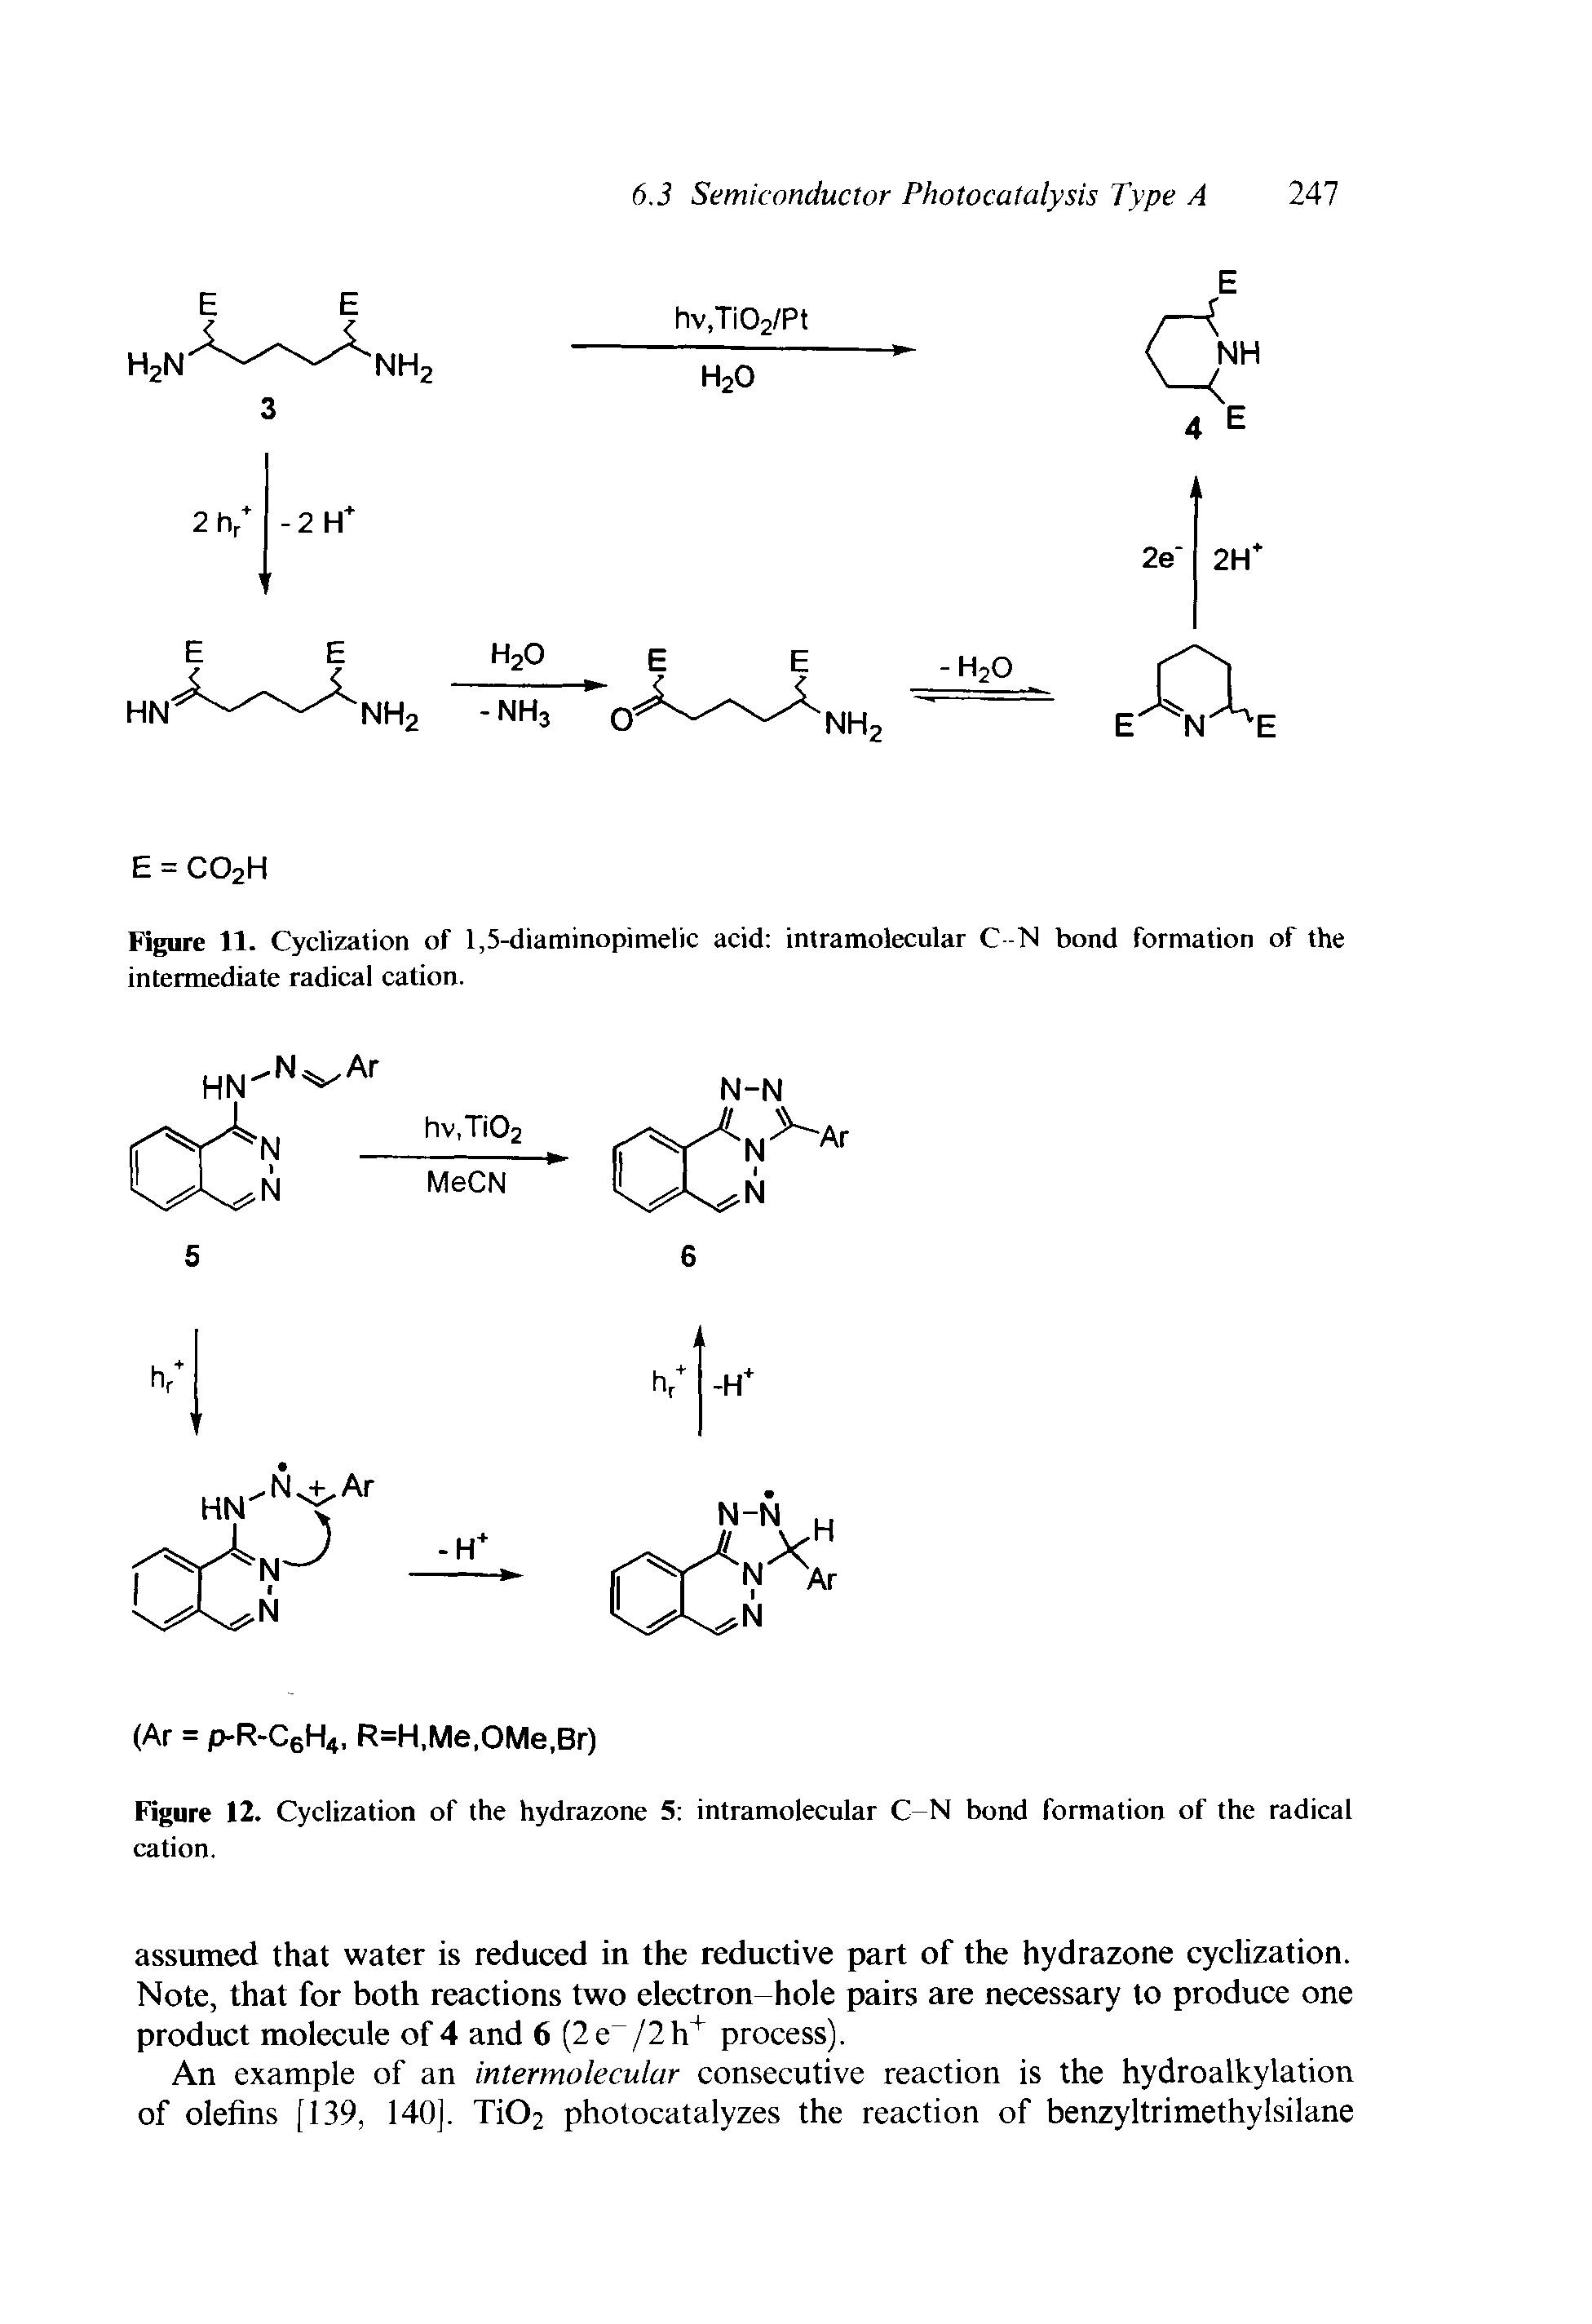 Figure 11. Cyclization of 1,5-diaminopimelic acid intramolecular C M bond formation of the intermediate radical cation.